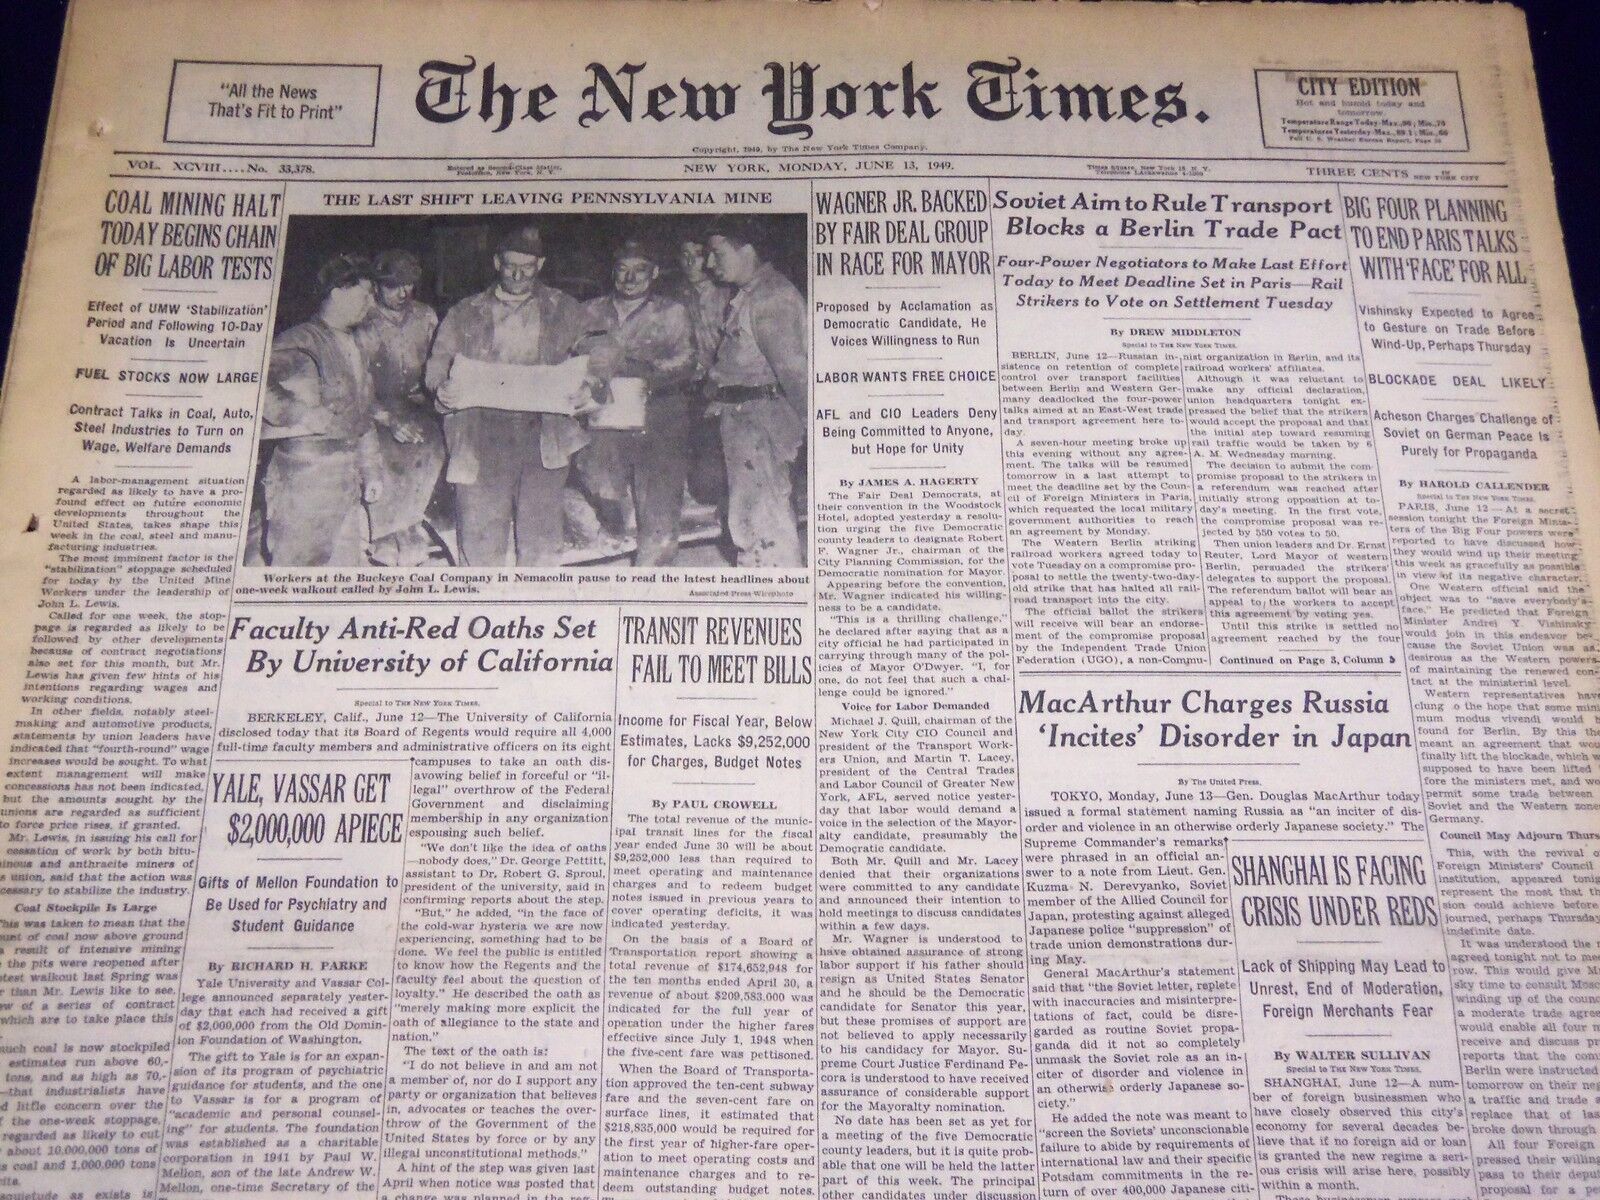 1949 JUNE 13 NEW YORK TIMES - COAL MINING HALT TODAY - NT 3218